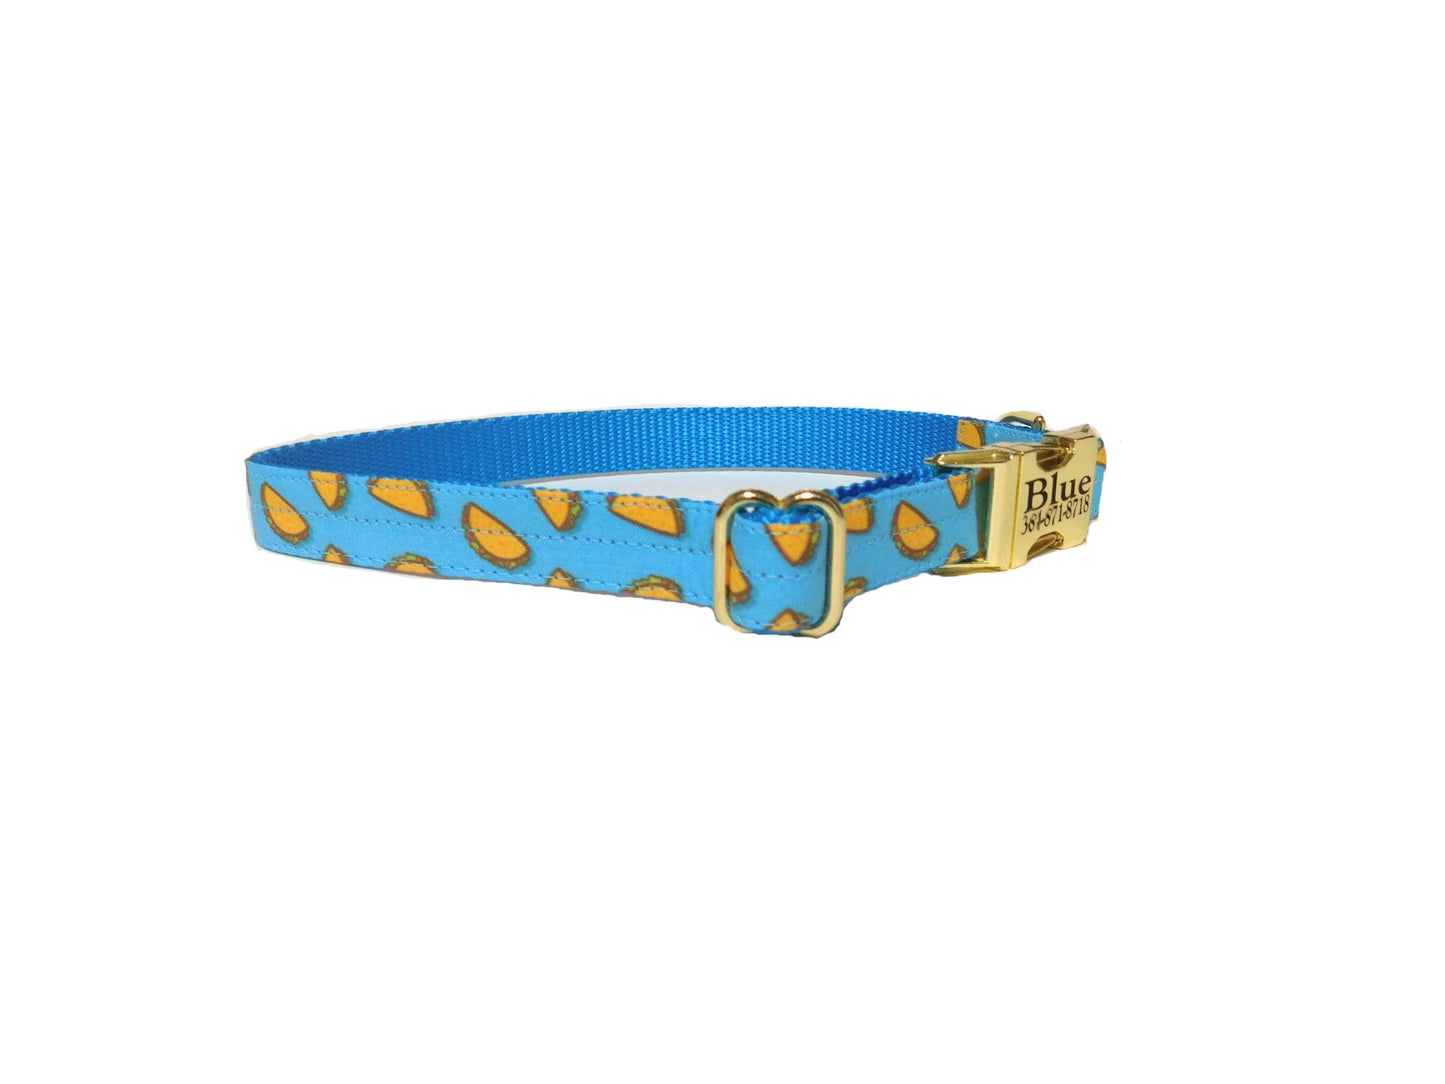 Taco Tuesday Dog Collar on Blue Webbing - Fabric Style - muttsnbones